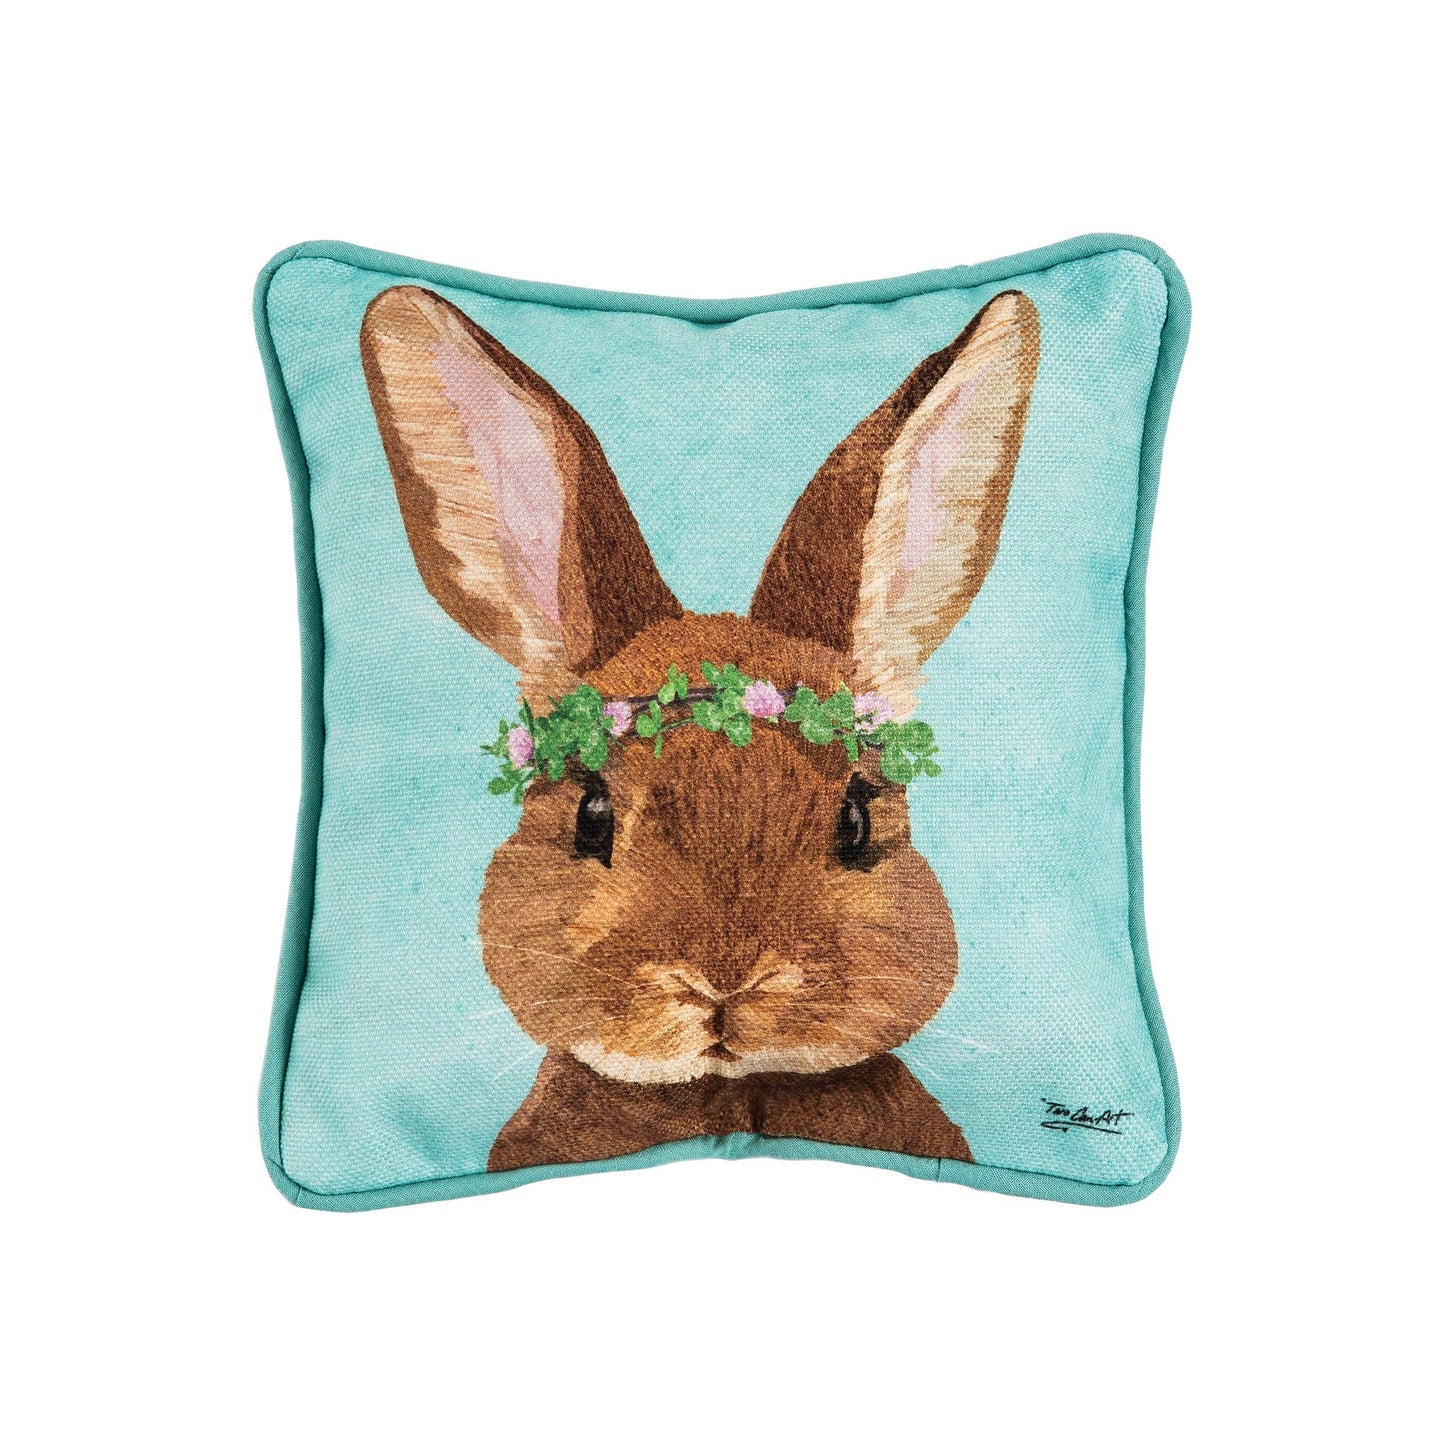 C&F Home - Easter Clover Bunny Throw Pillow